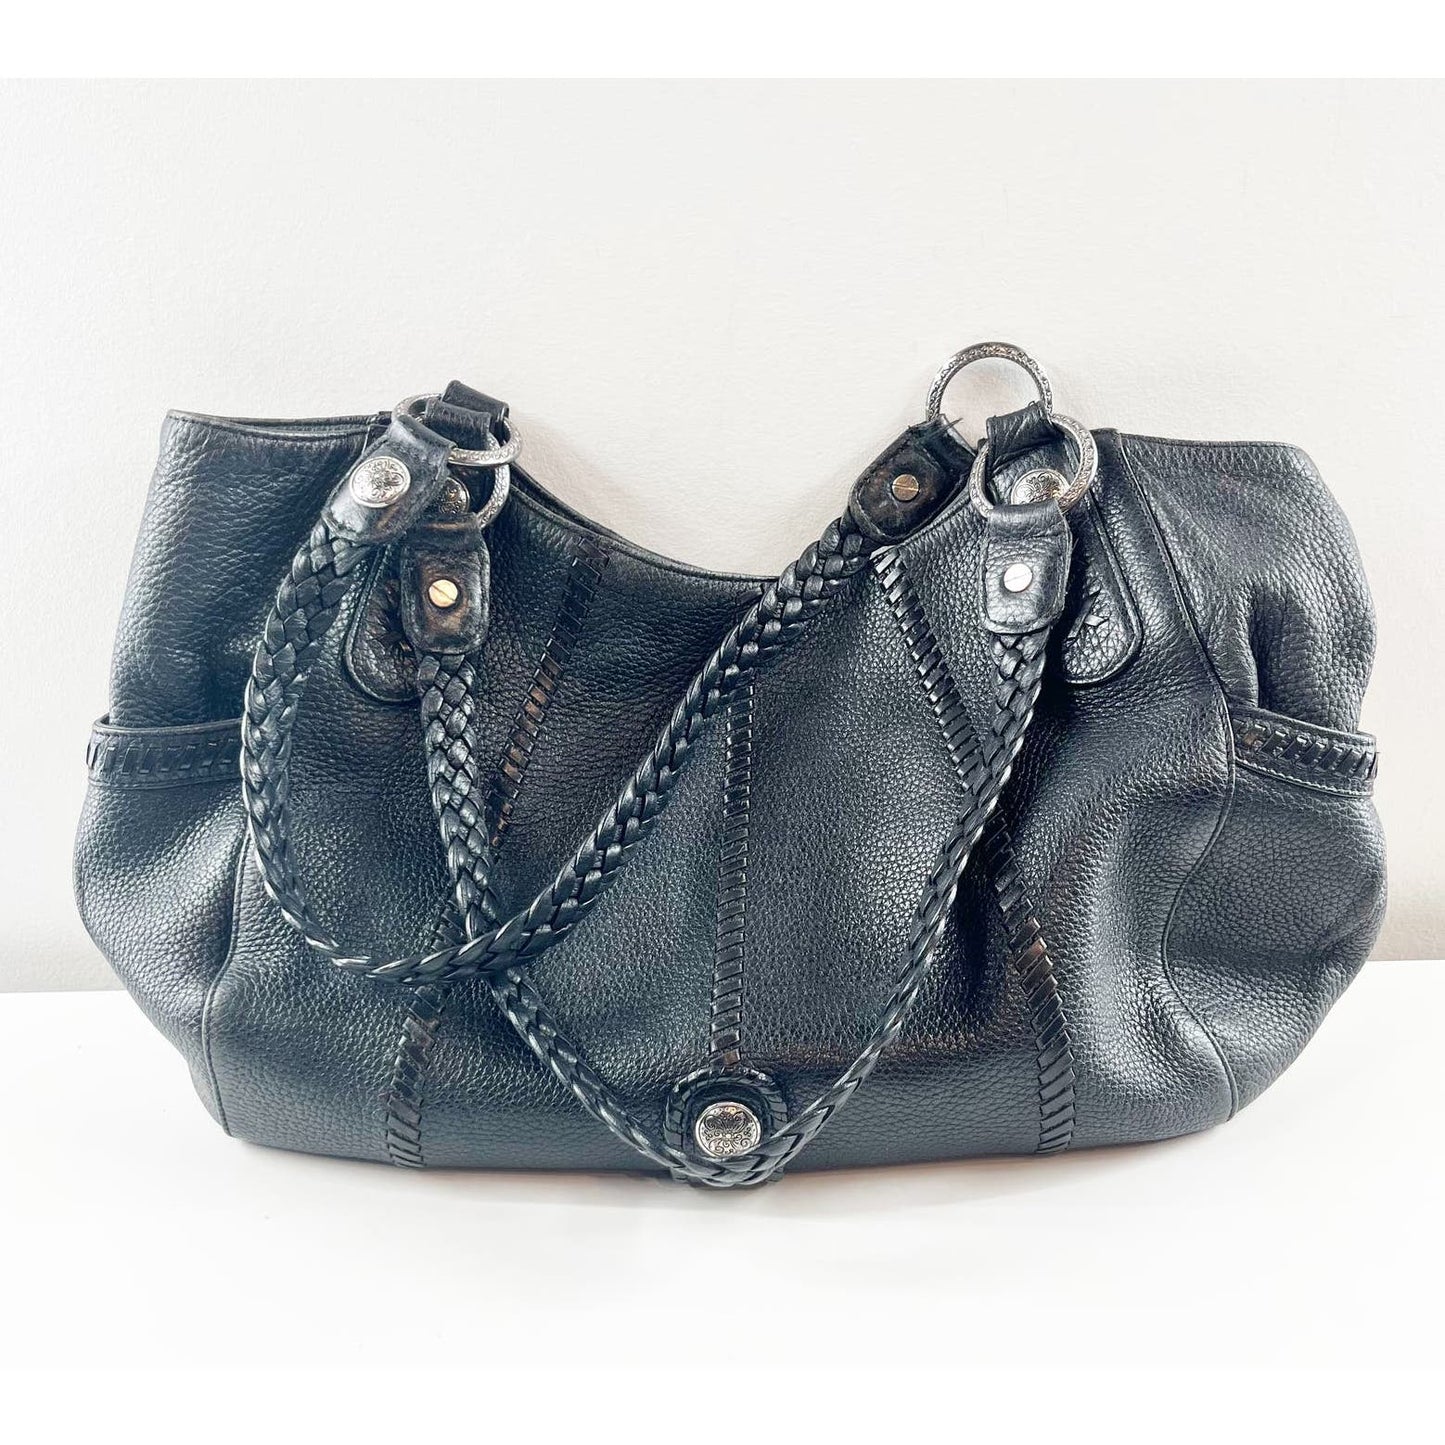 Brighton Braided Strap Leather Satchel Purse Bag Black